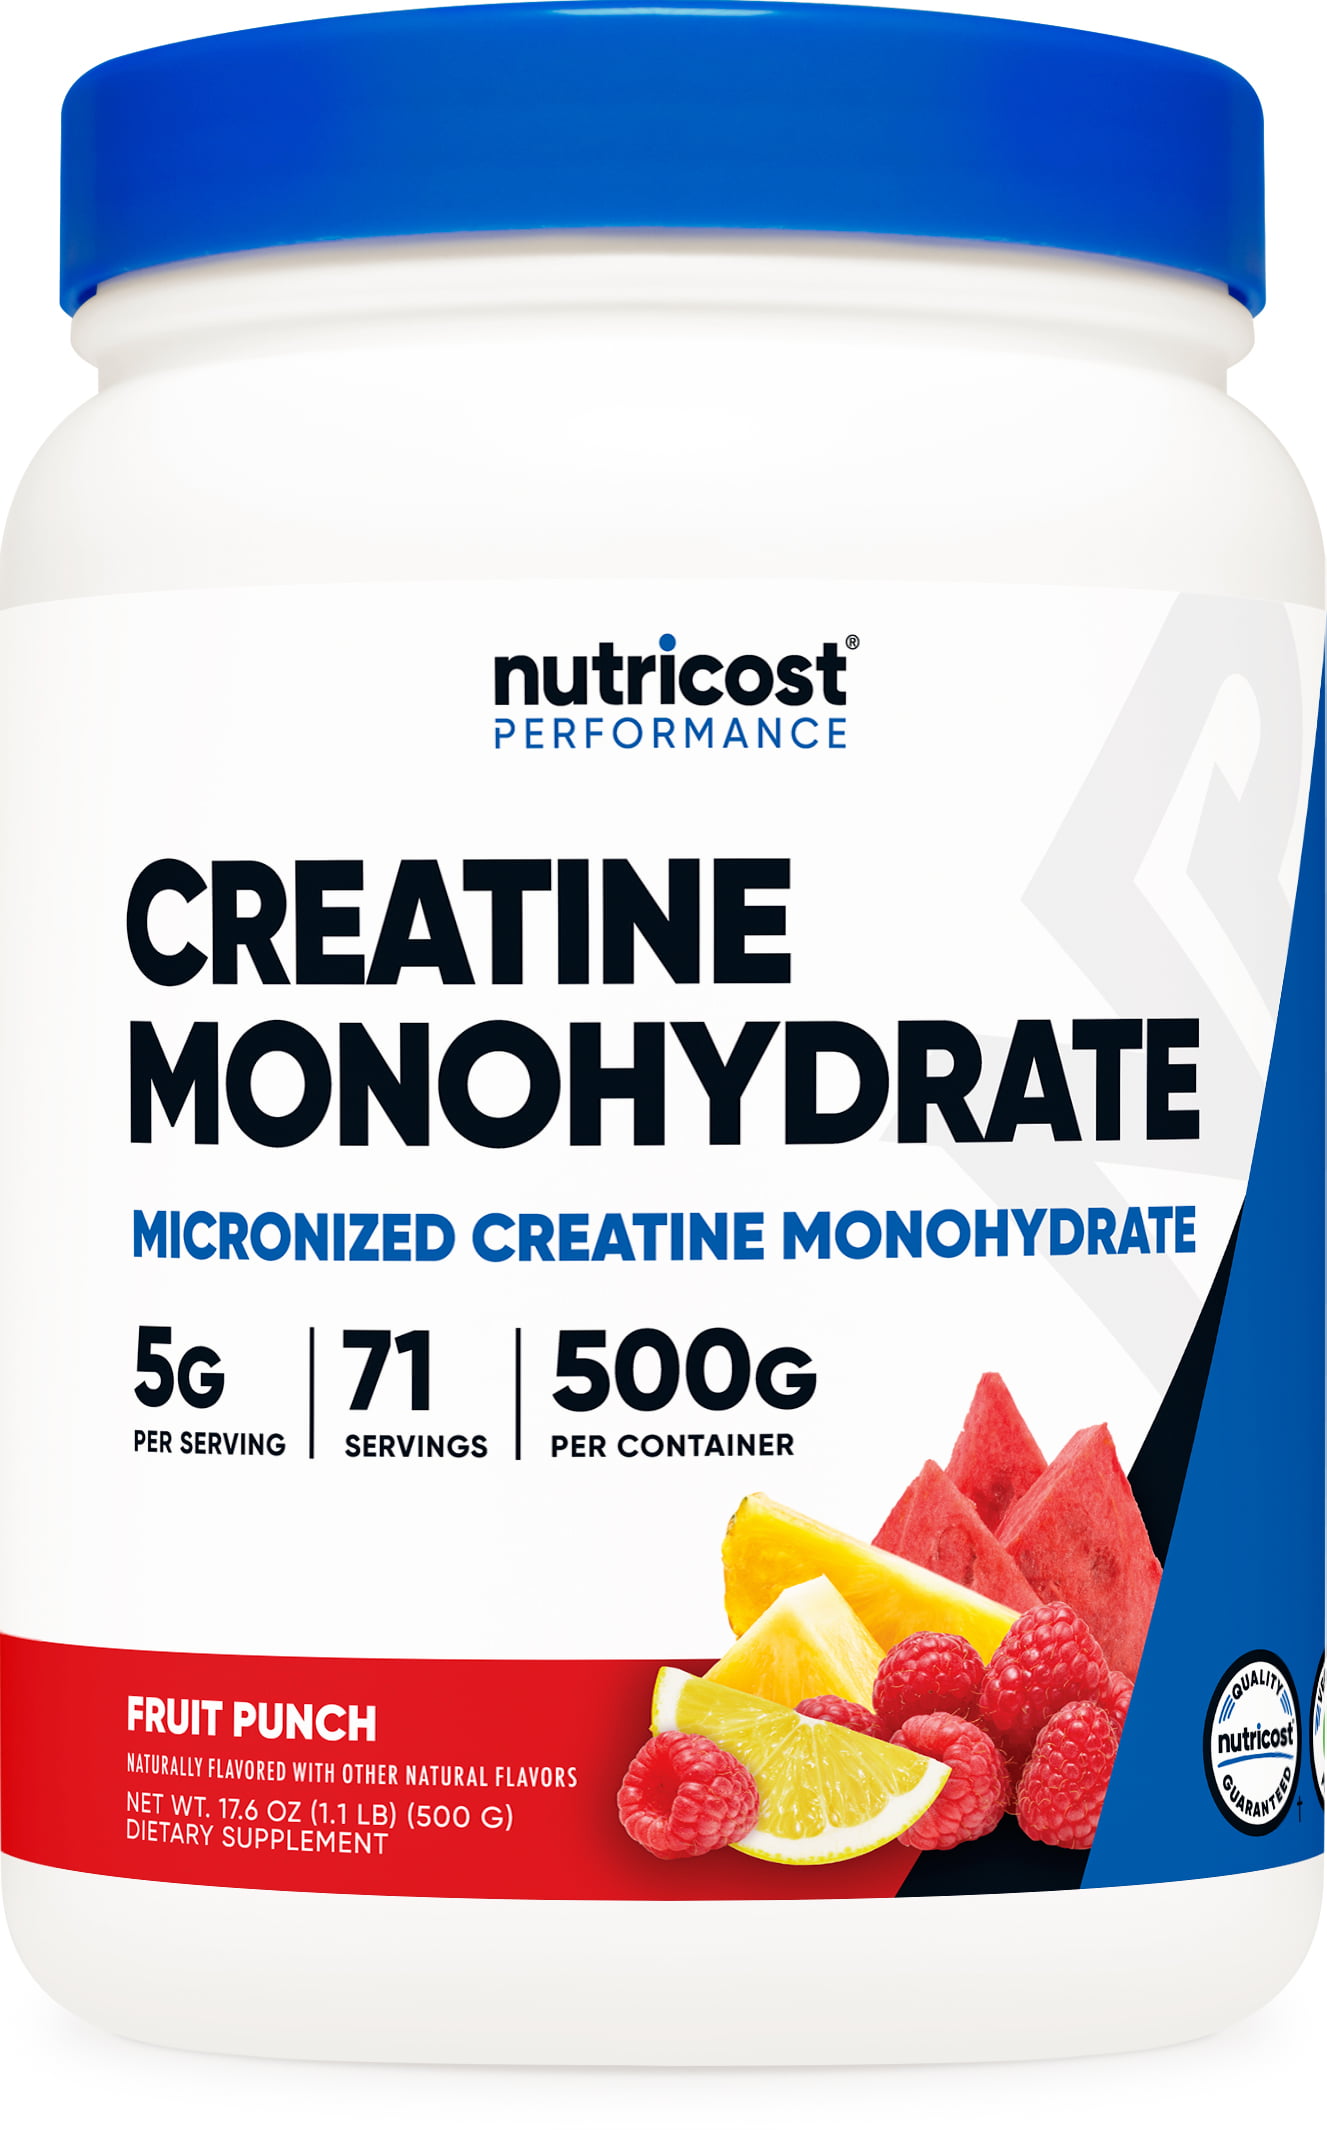 Pure High Quality Powder Nutricost Creapure Creatine Monohydrate 1kg 